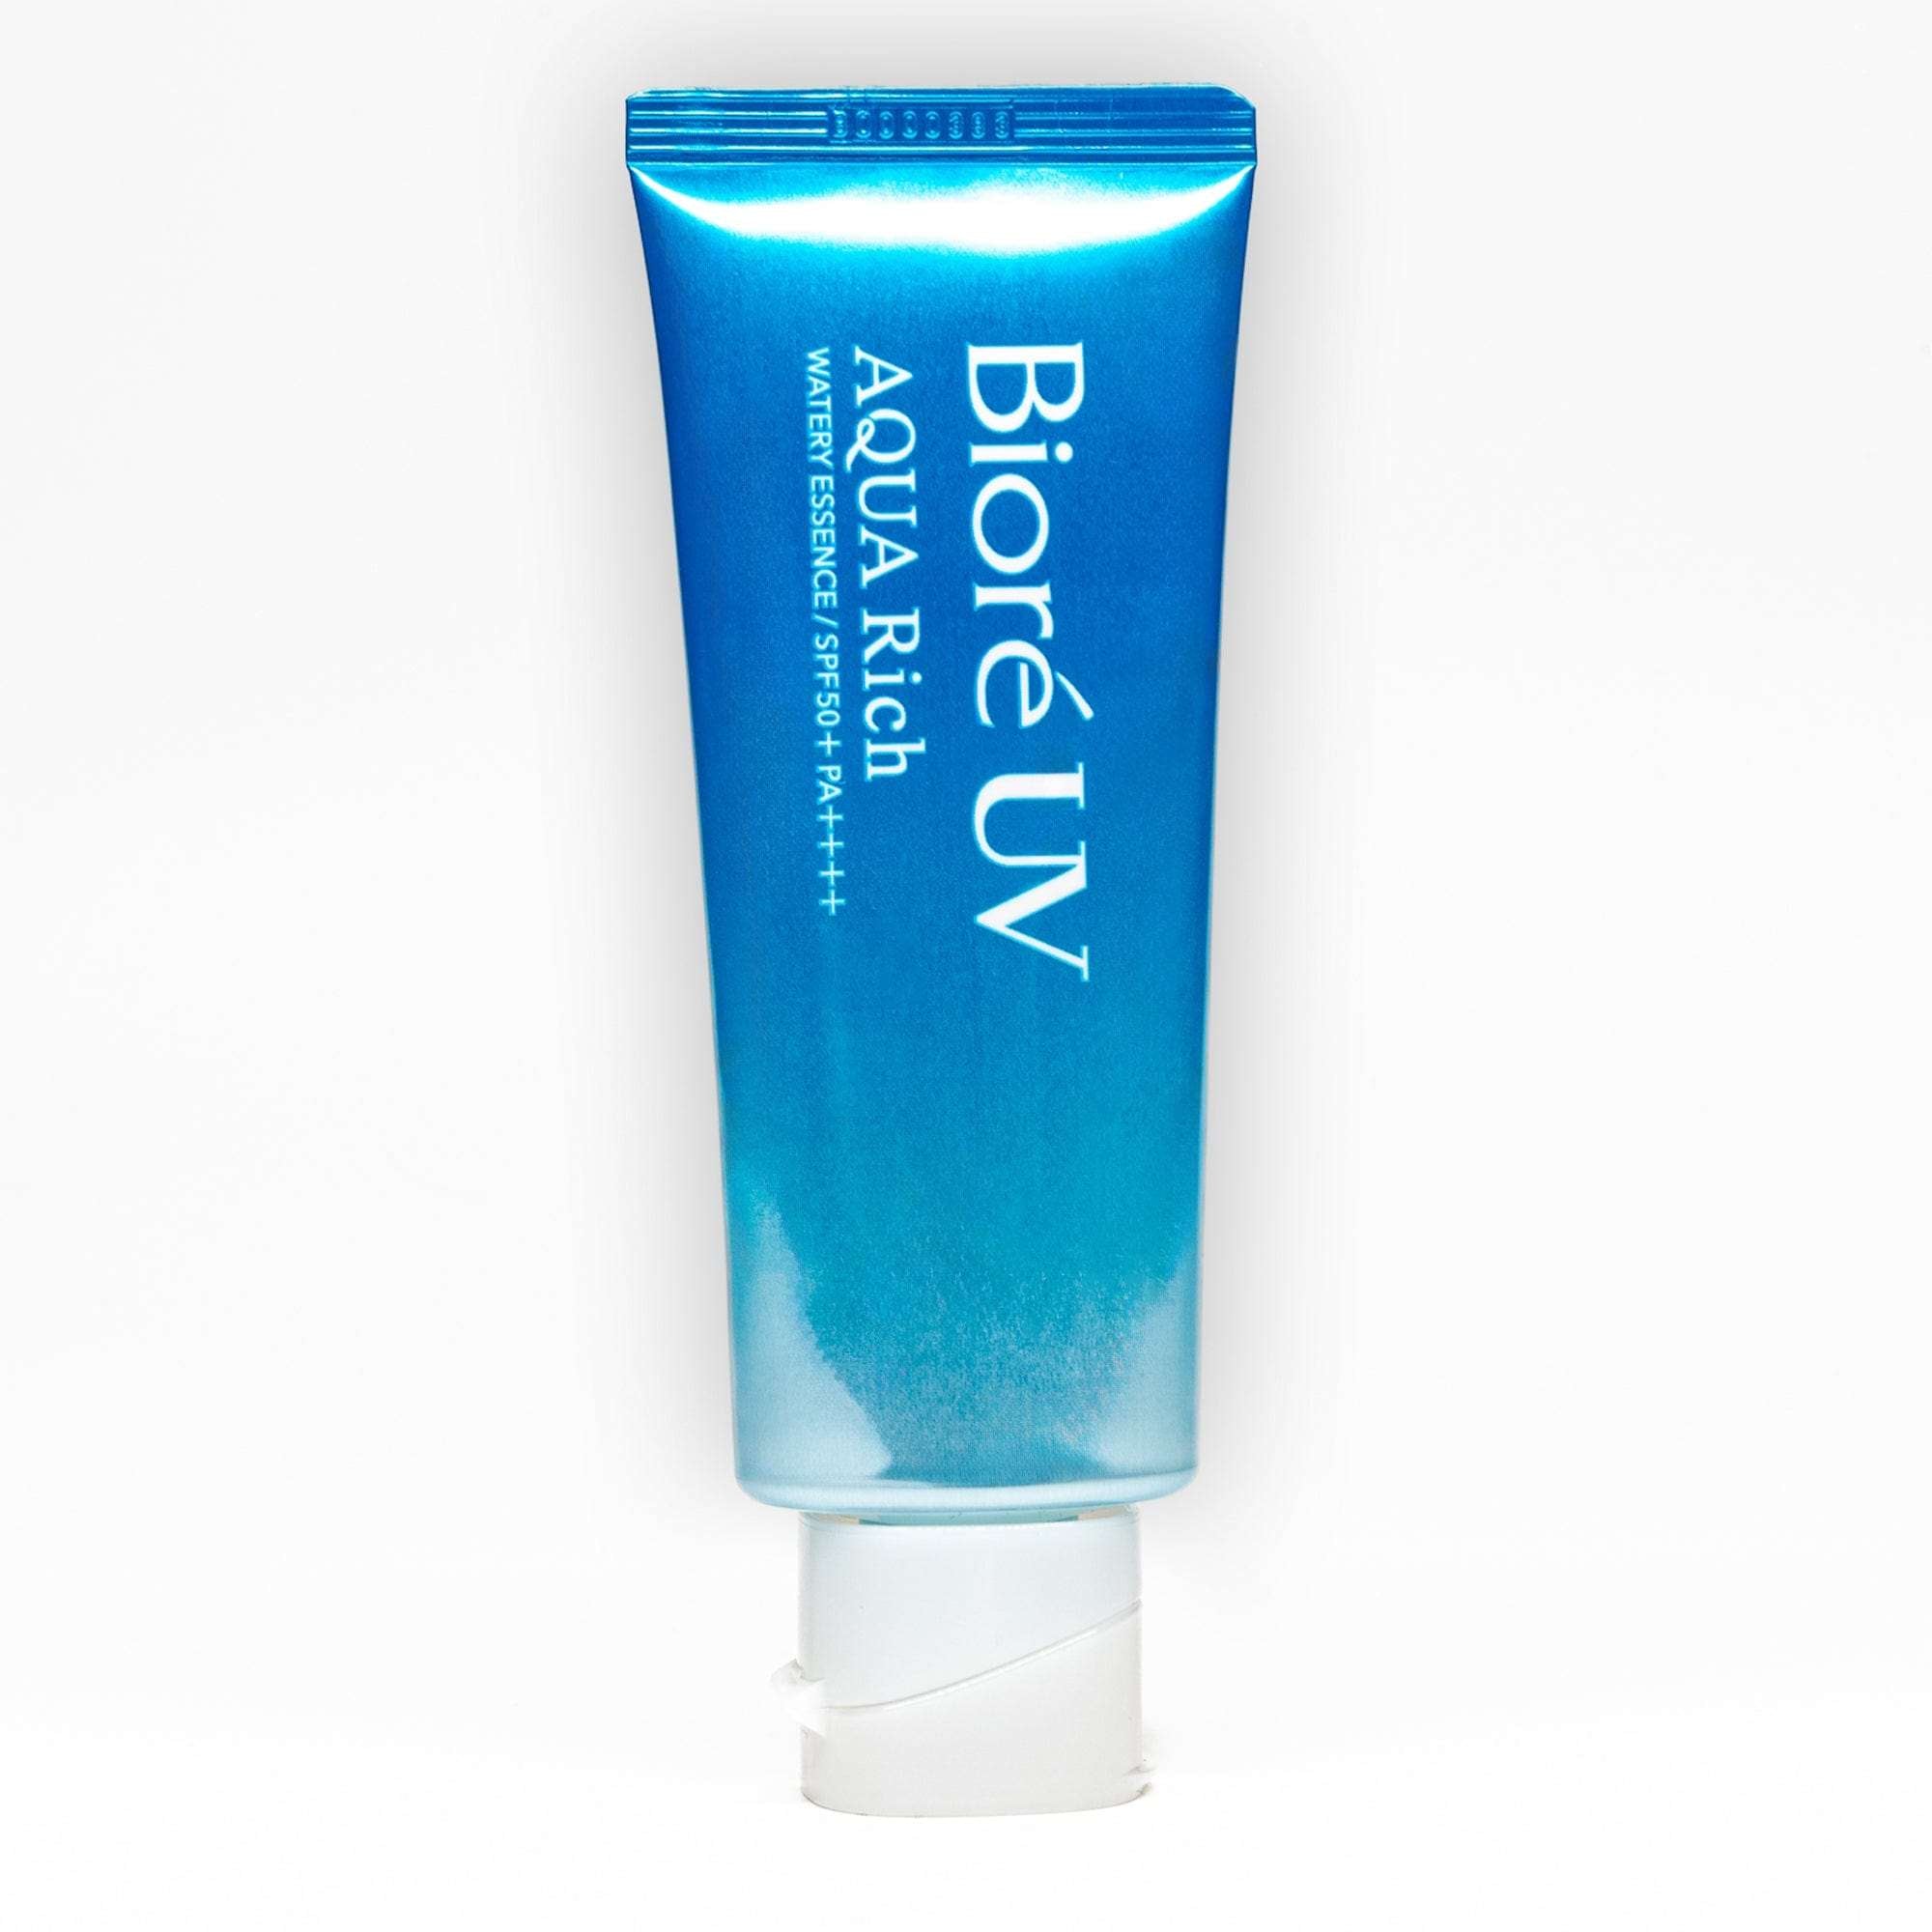 Biore UV Aqua Rich Watery Essence Sunscreen SPF 50+ PA++++ [70g]